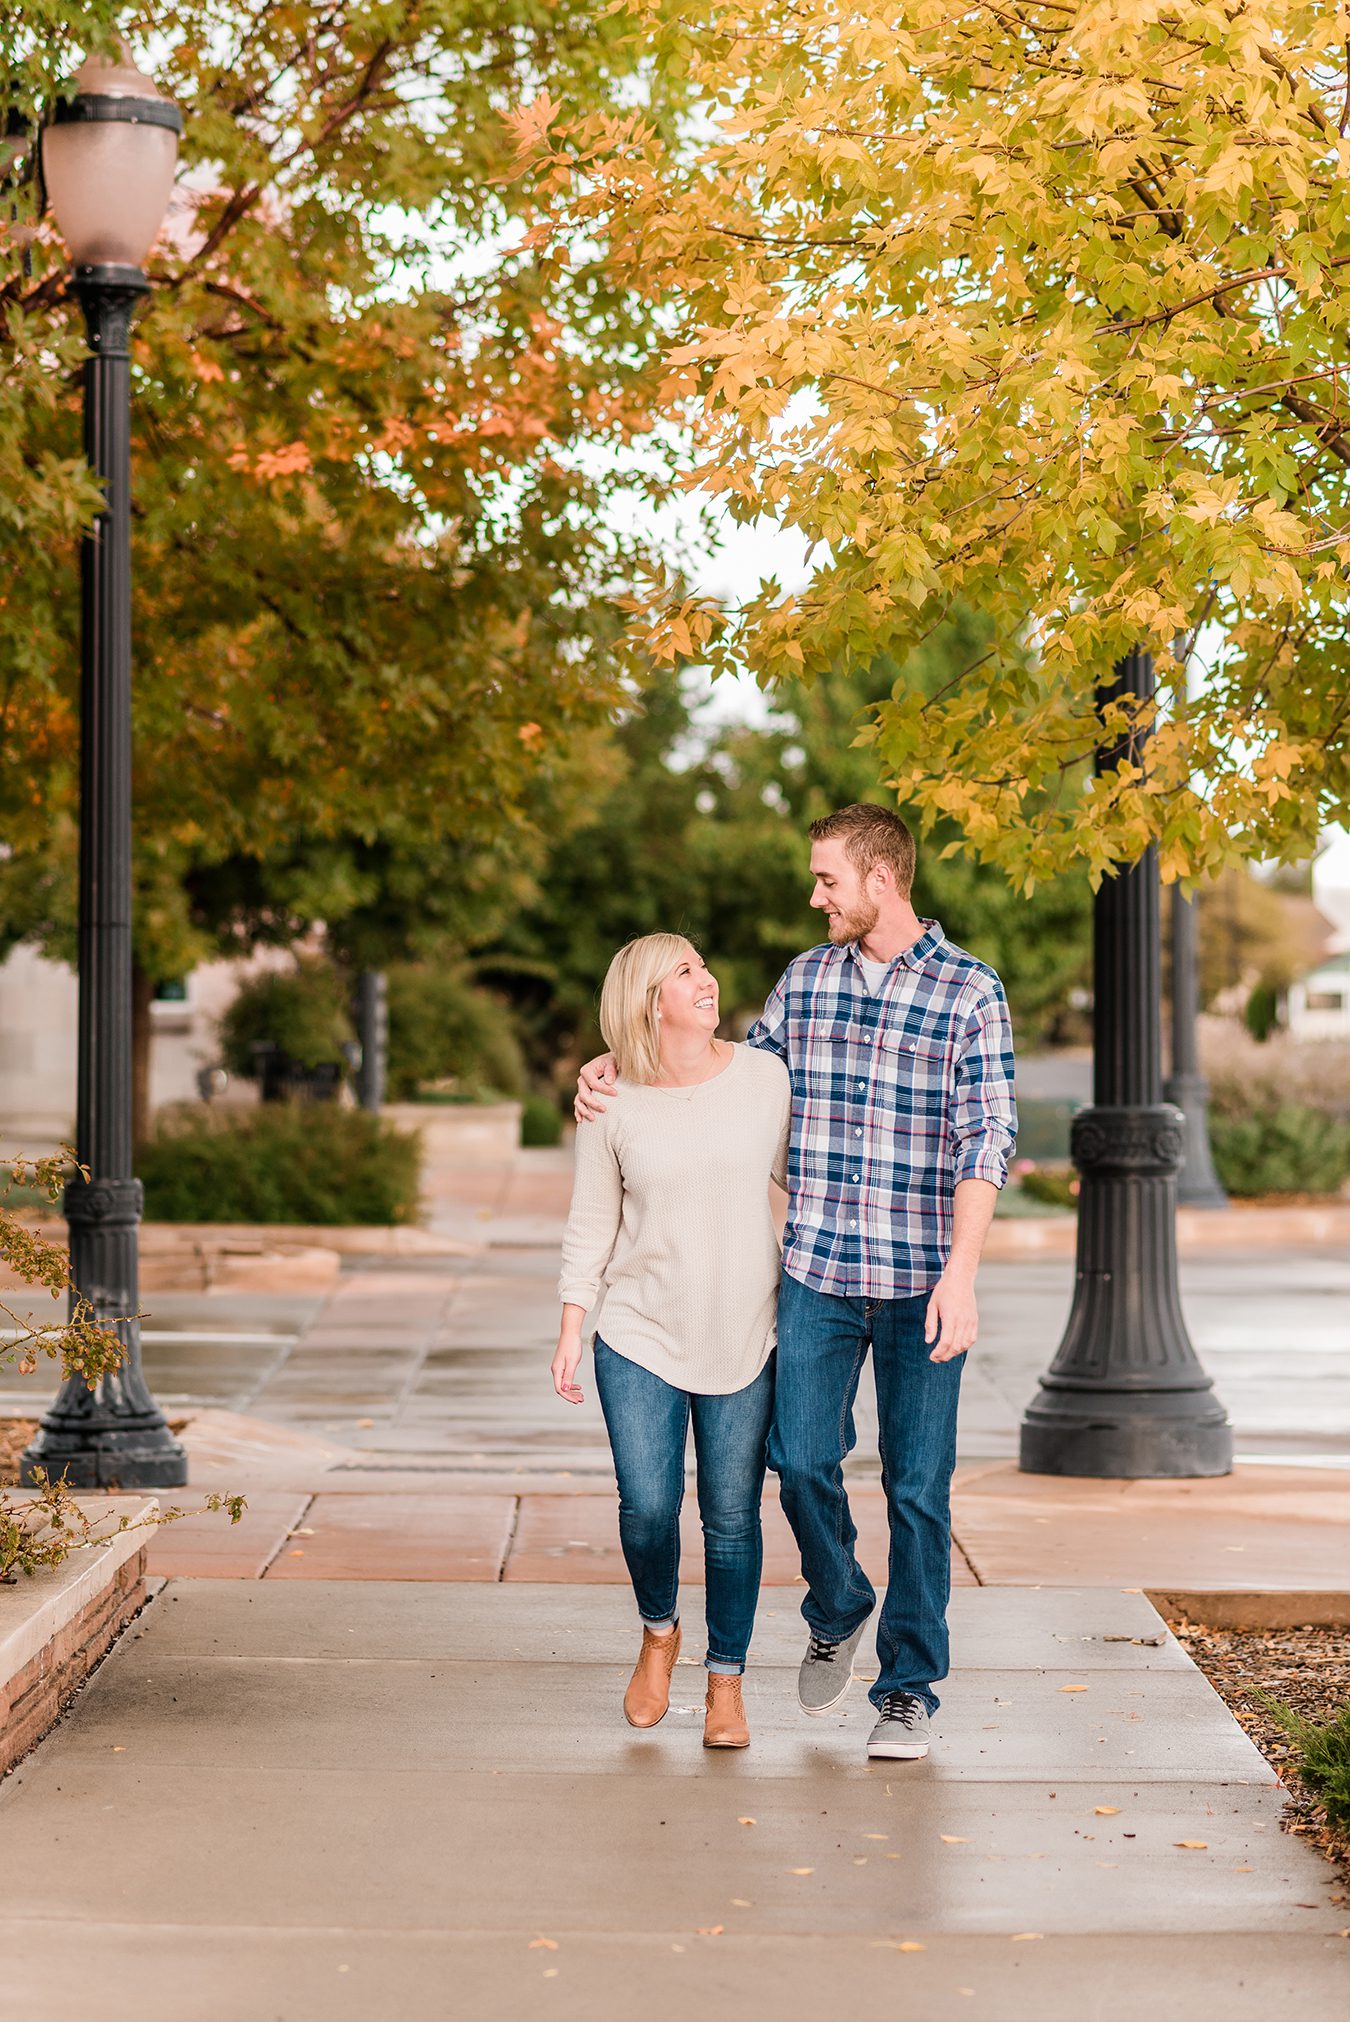 Brandon & Jennifer's fall engagement in downtown Grand Junction | amanda.matilda.photography